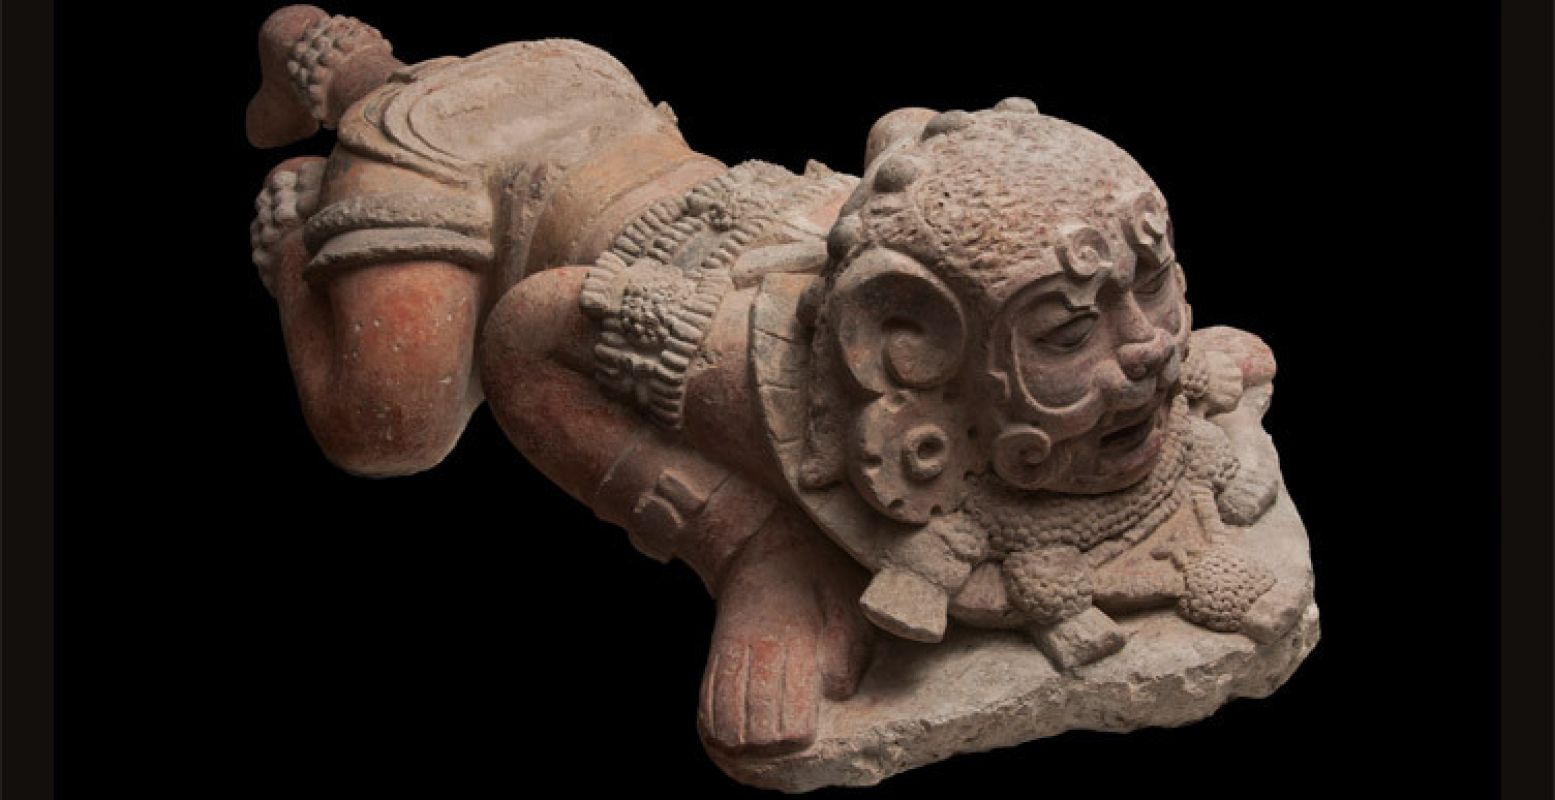 Masker gemaakt van jade, obsidiaan en schelpen, 500 - 800 na Christus, jade, collectie: Fundaciân La Ruta Maya, Guatemala